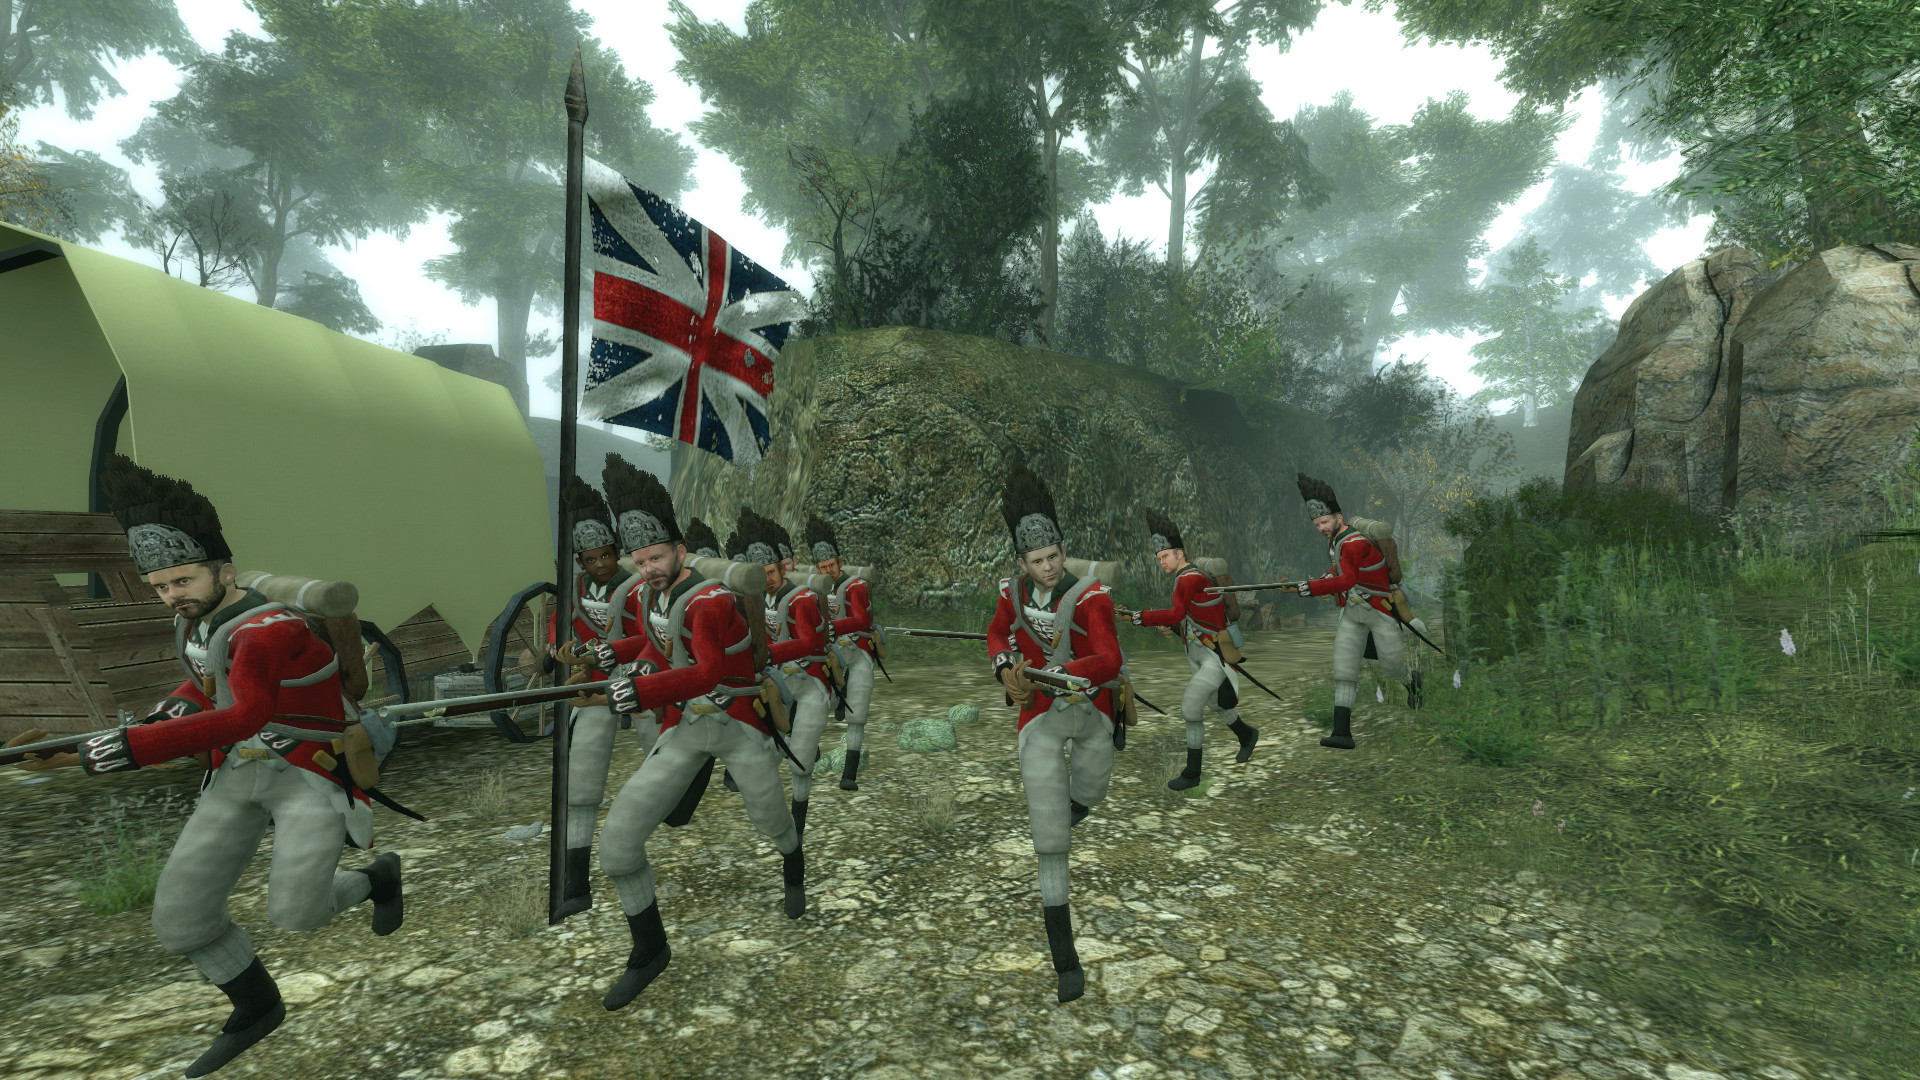 Battle Grounds III on Steam